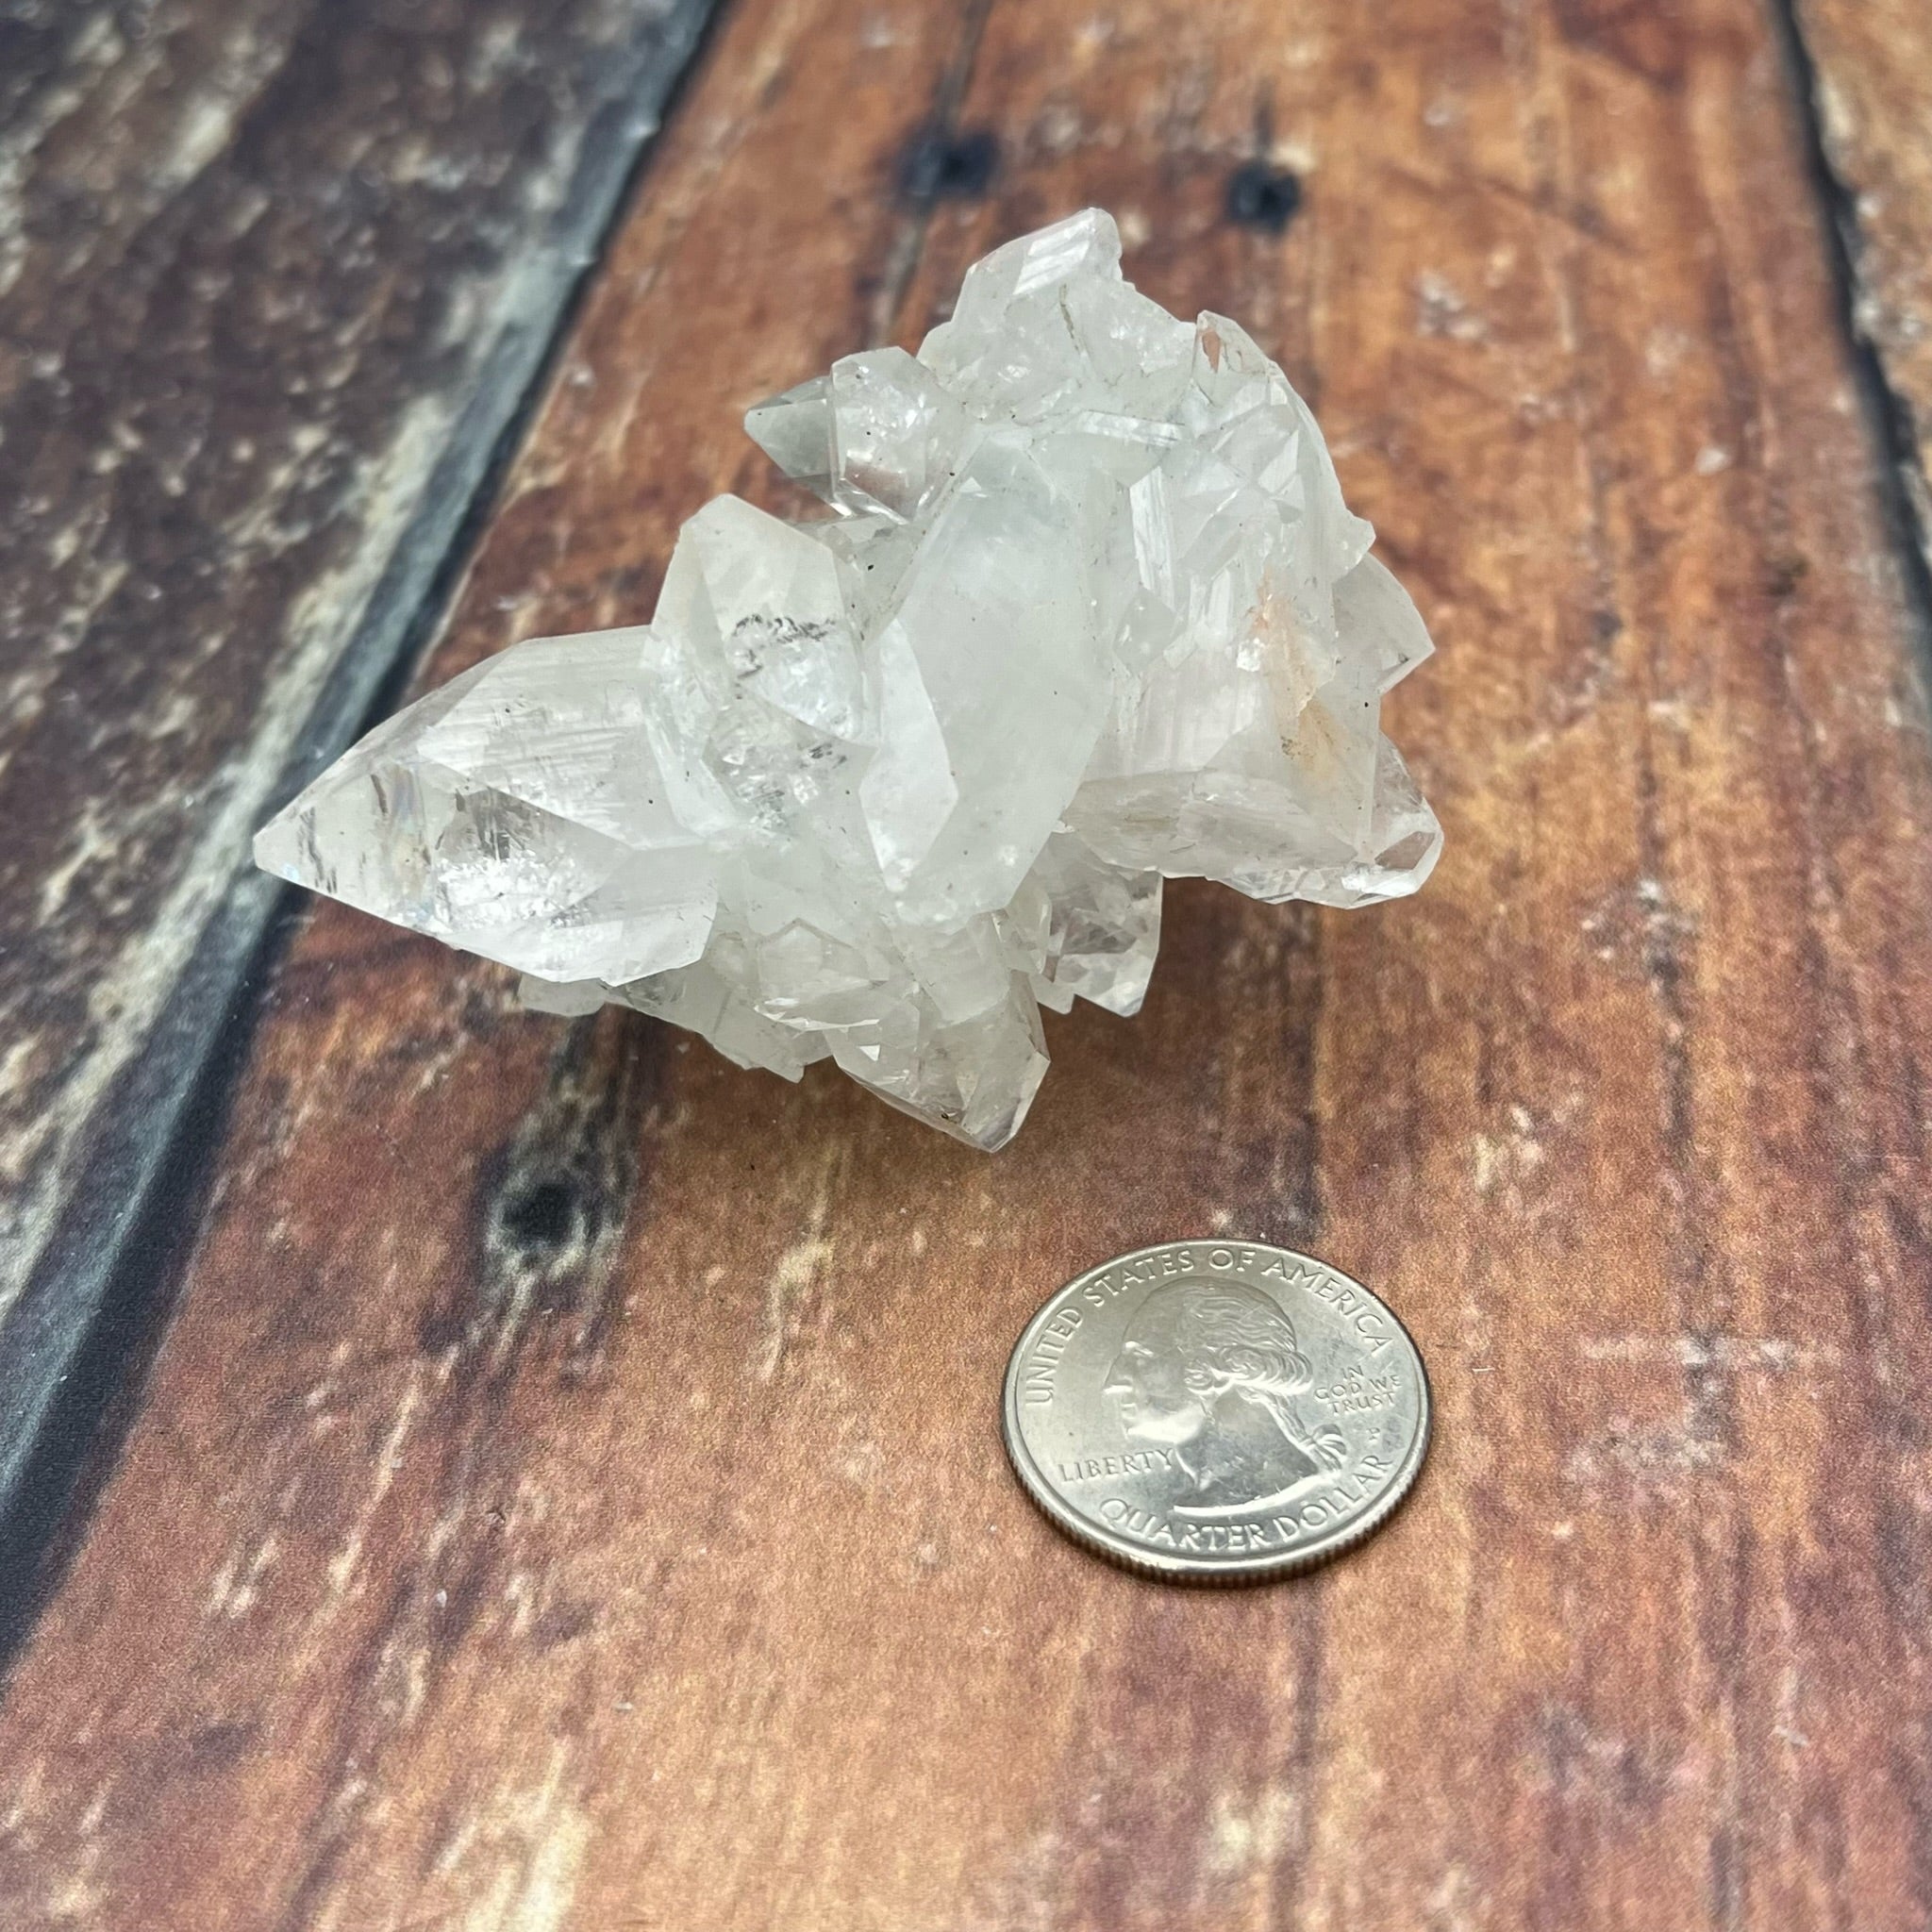 Apophyllite Crystal - 389